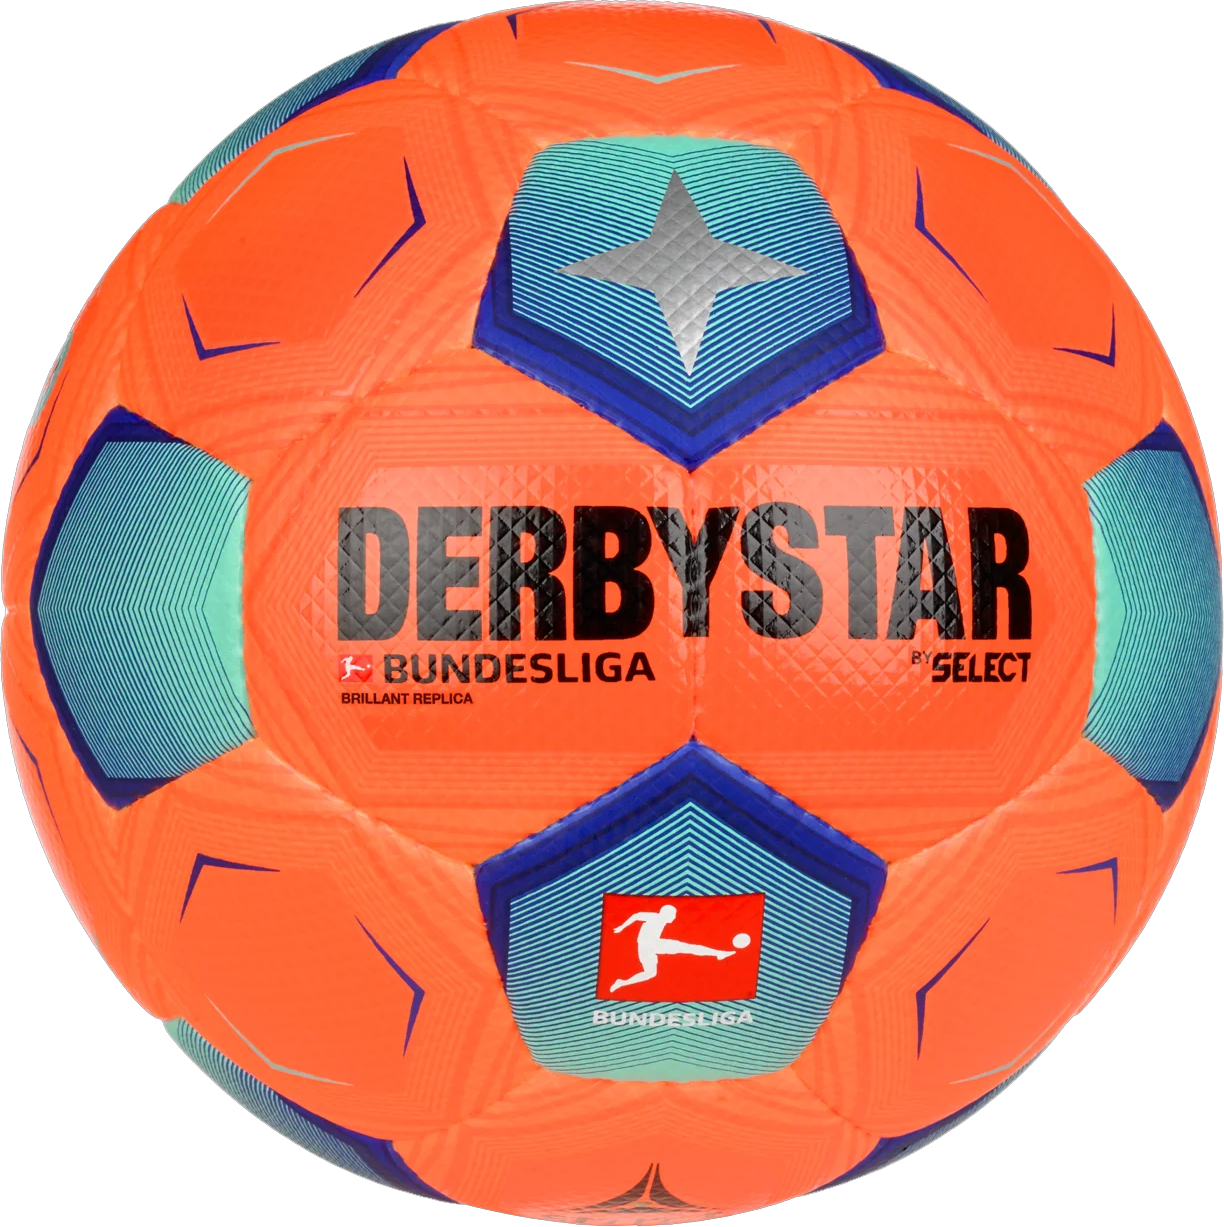 Derbystar Bundesliga Brillant Replica High Visible v23 Labda